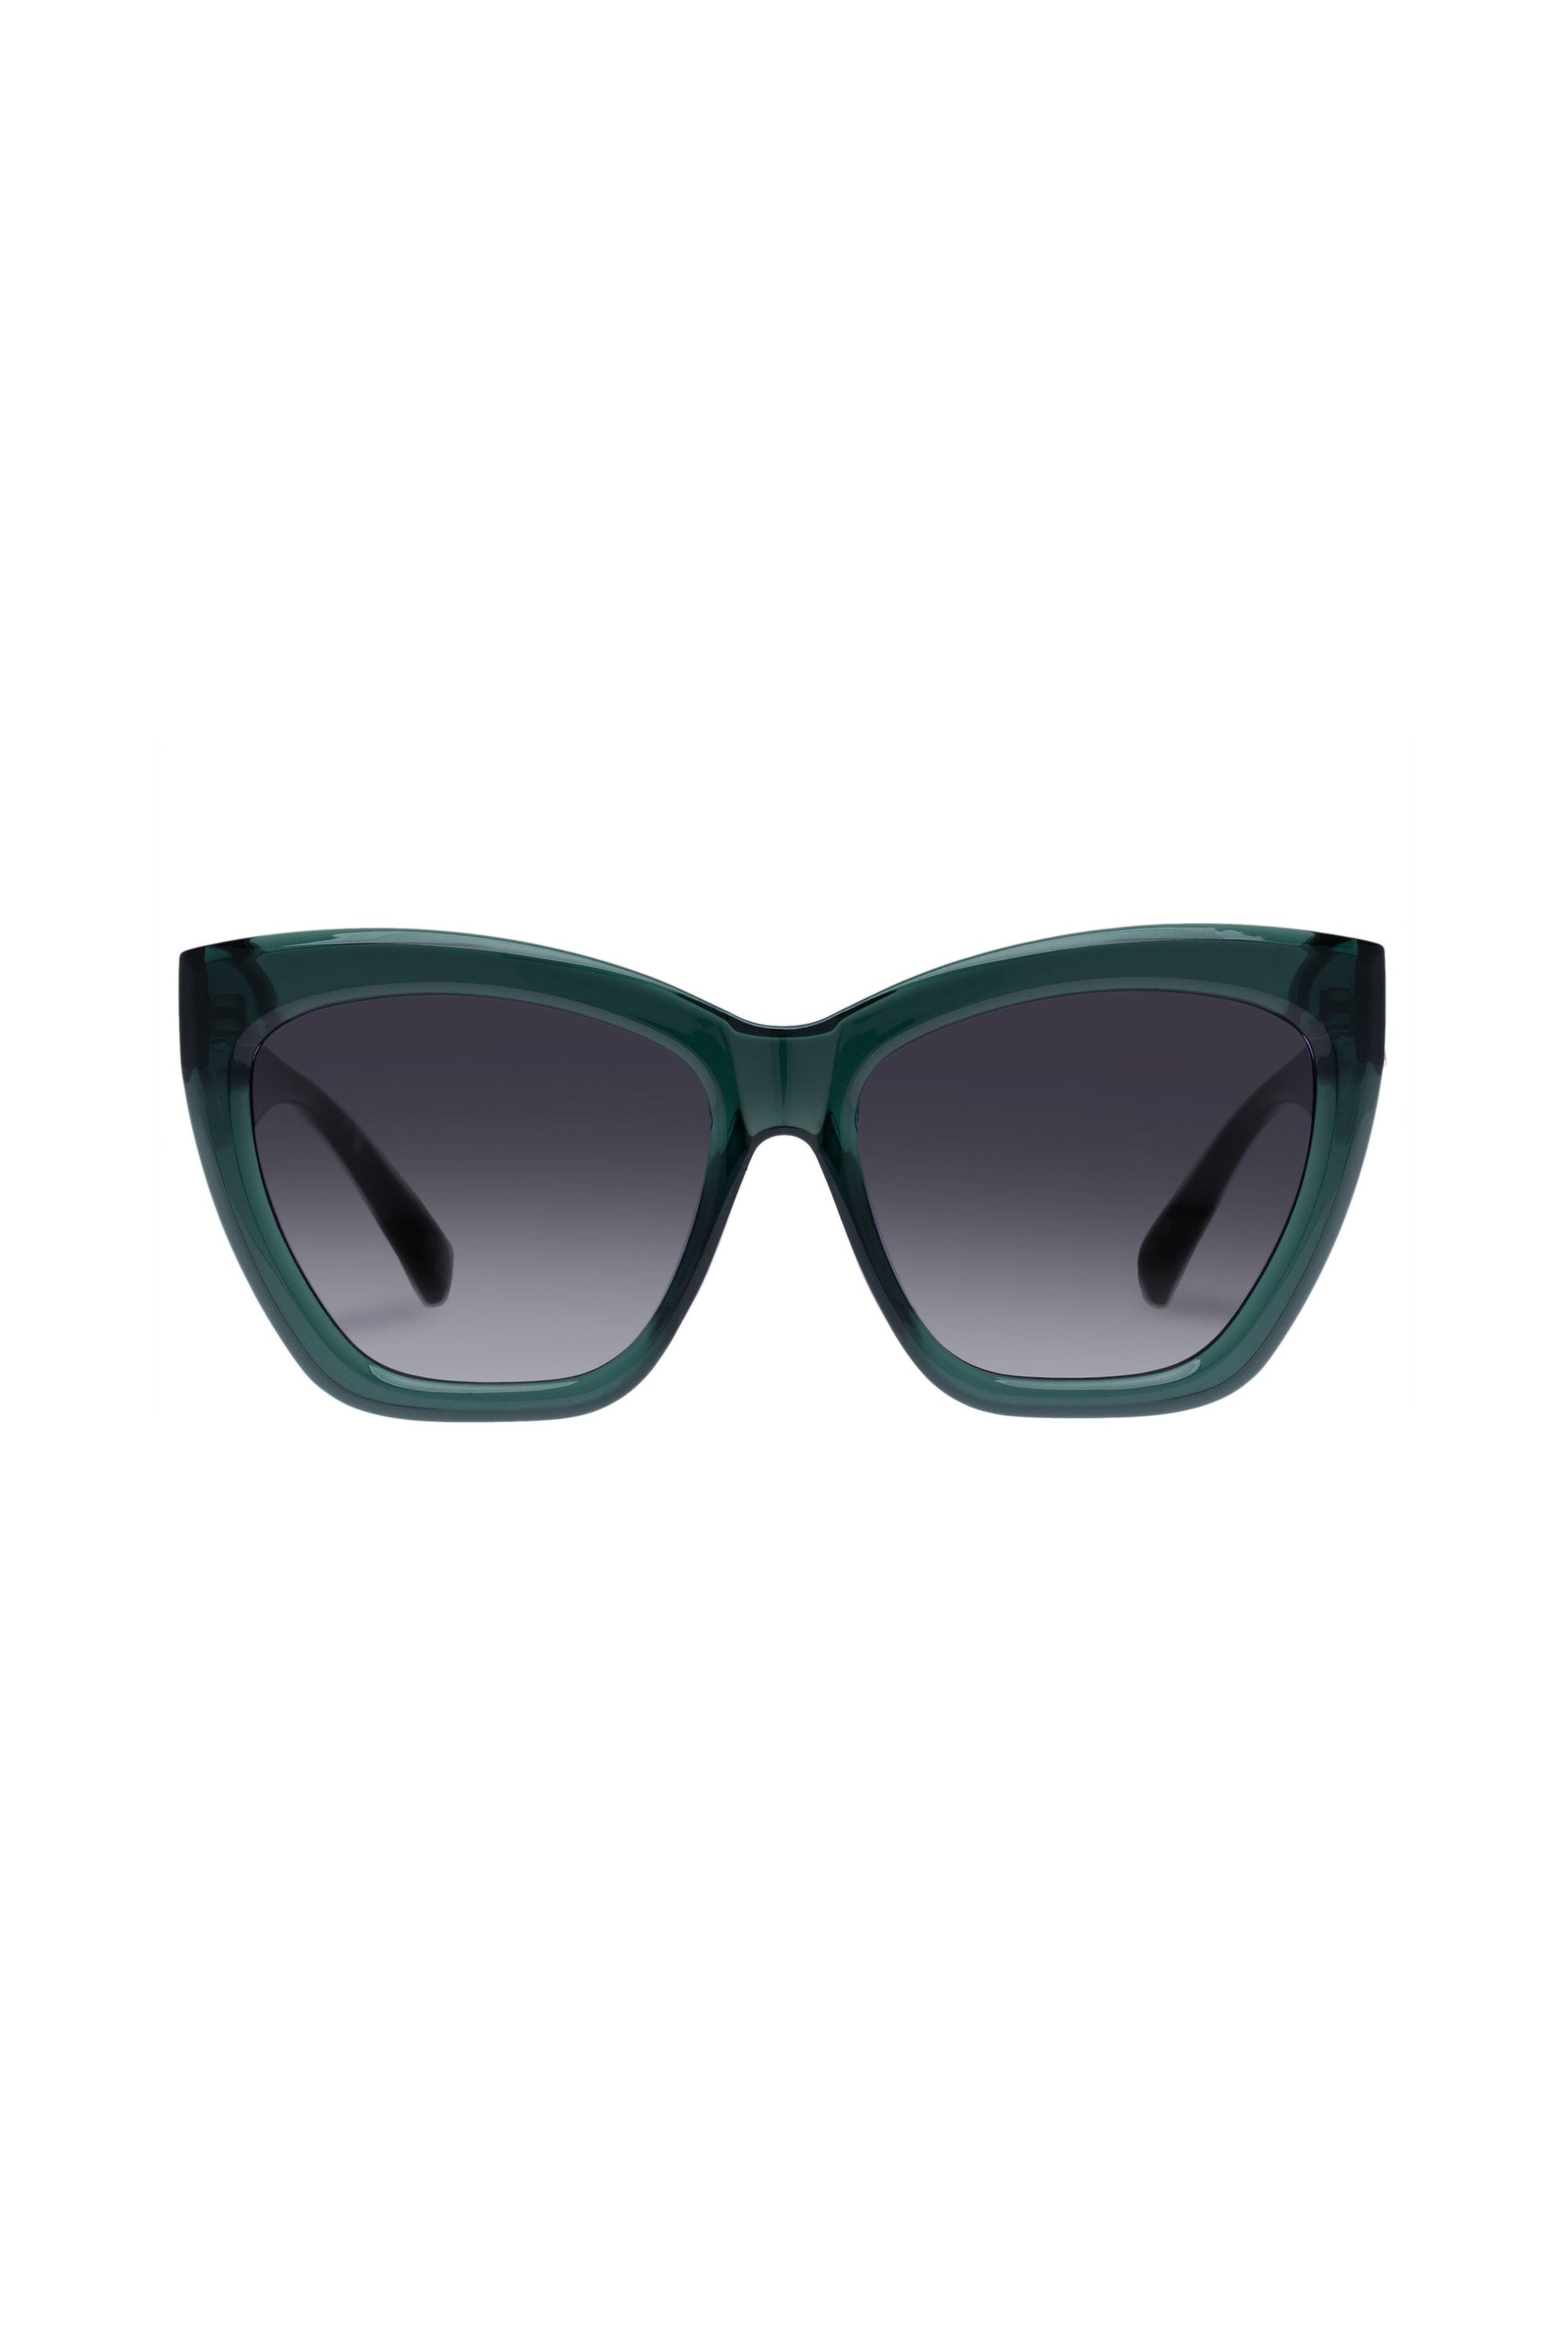 Vamos Sunglasses - Emerald Green